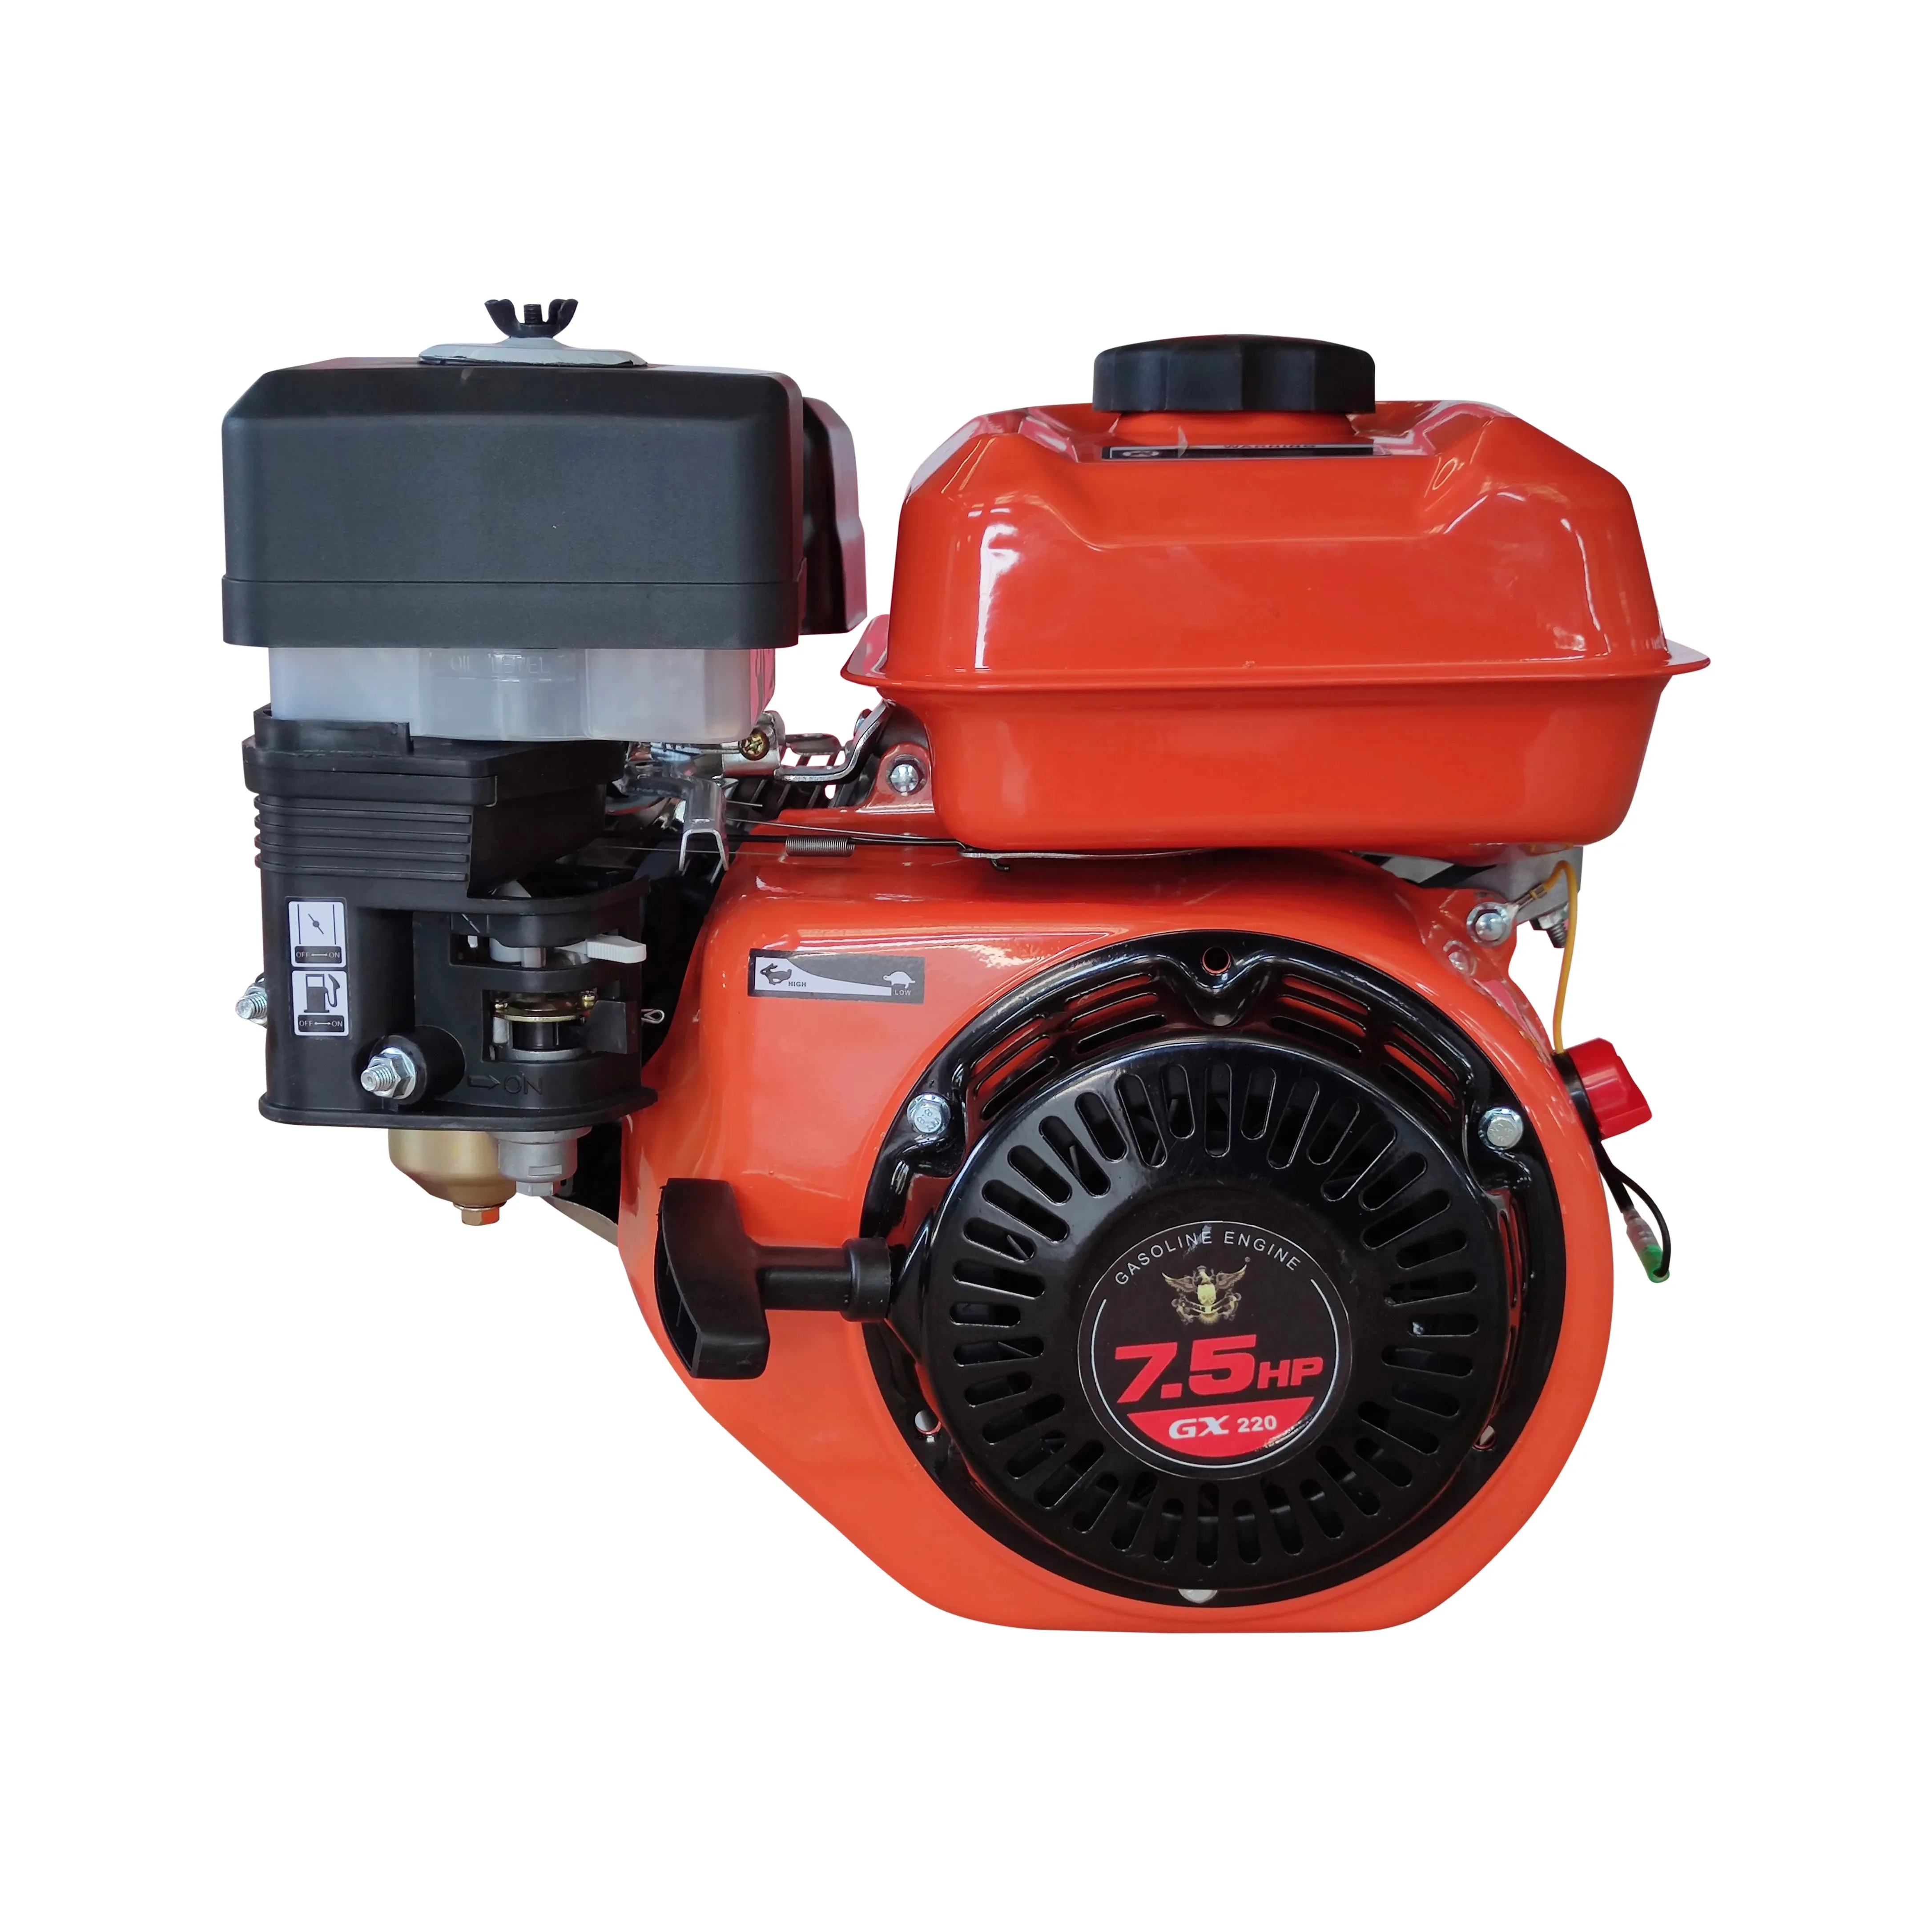 OHV 7 Hp Gasoline Engine 4 Stroke Single Cylinder GX220 Petrol Engine For Water Pumps Generators Agricultural Sprayers